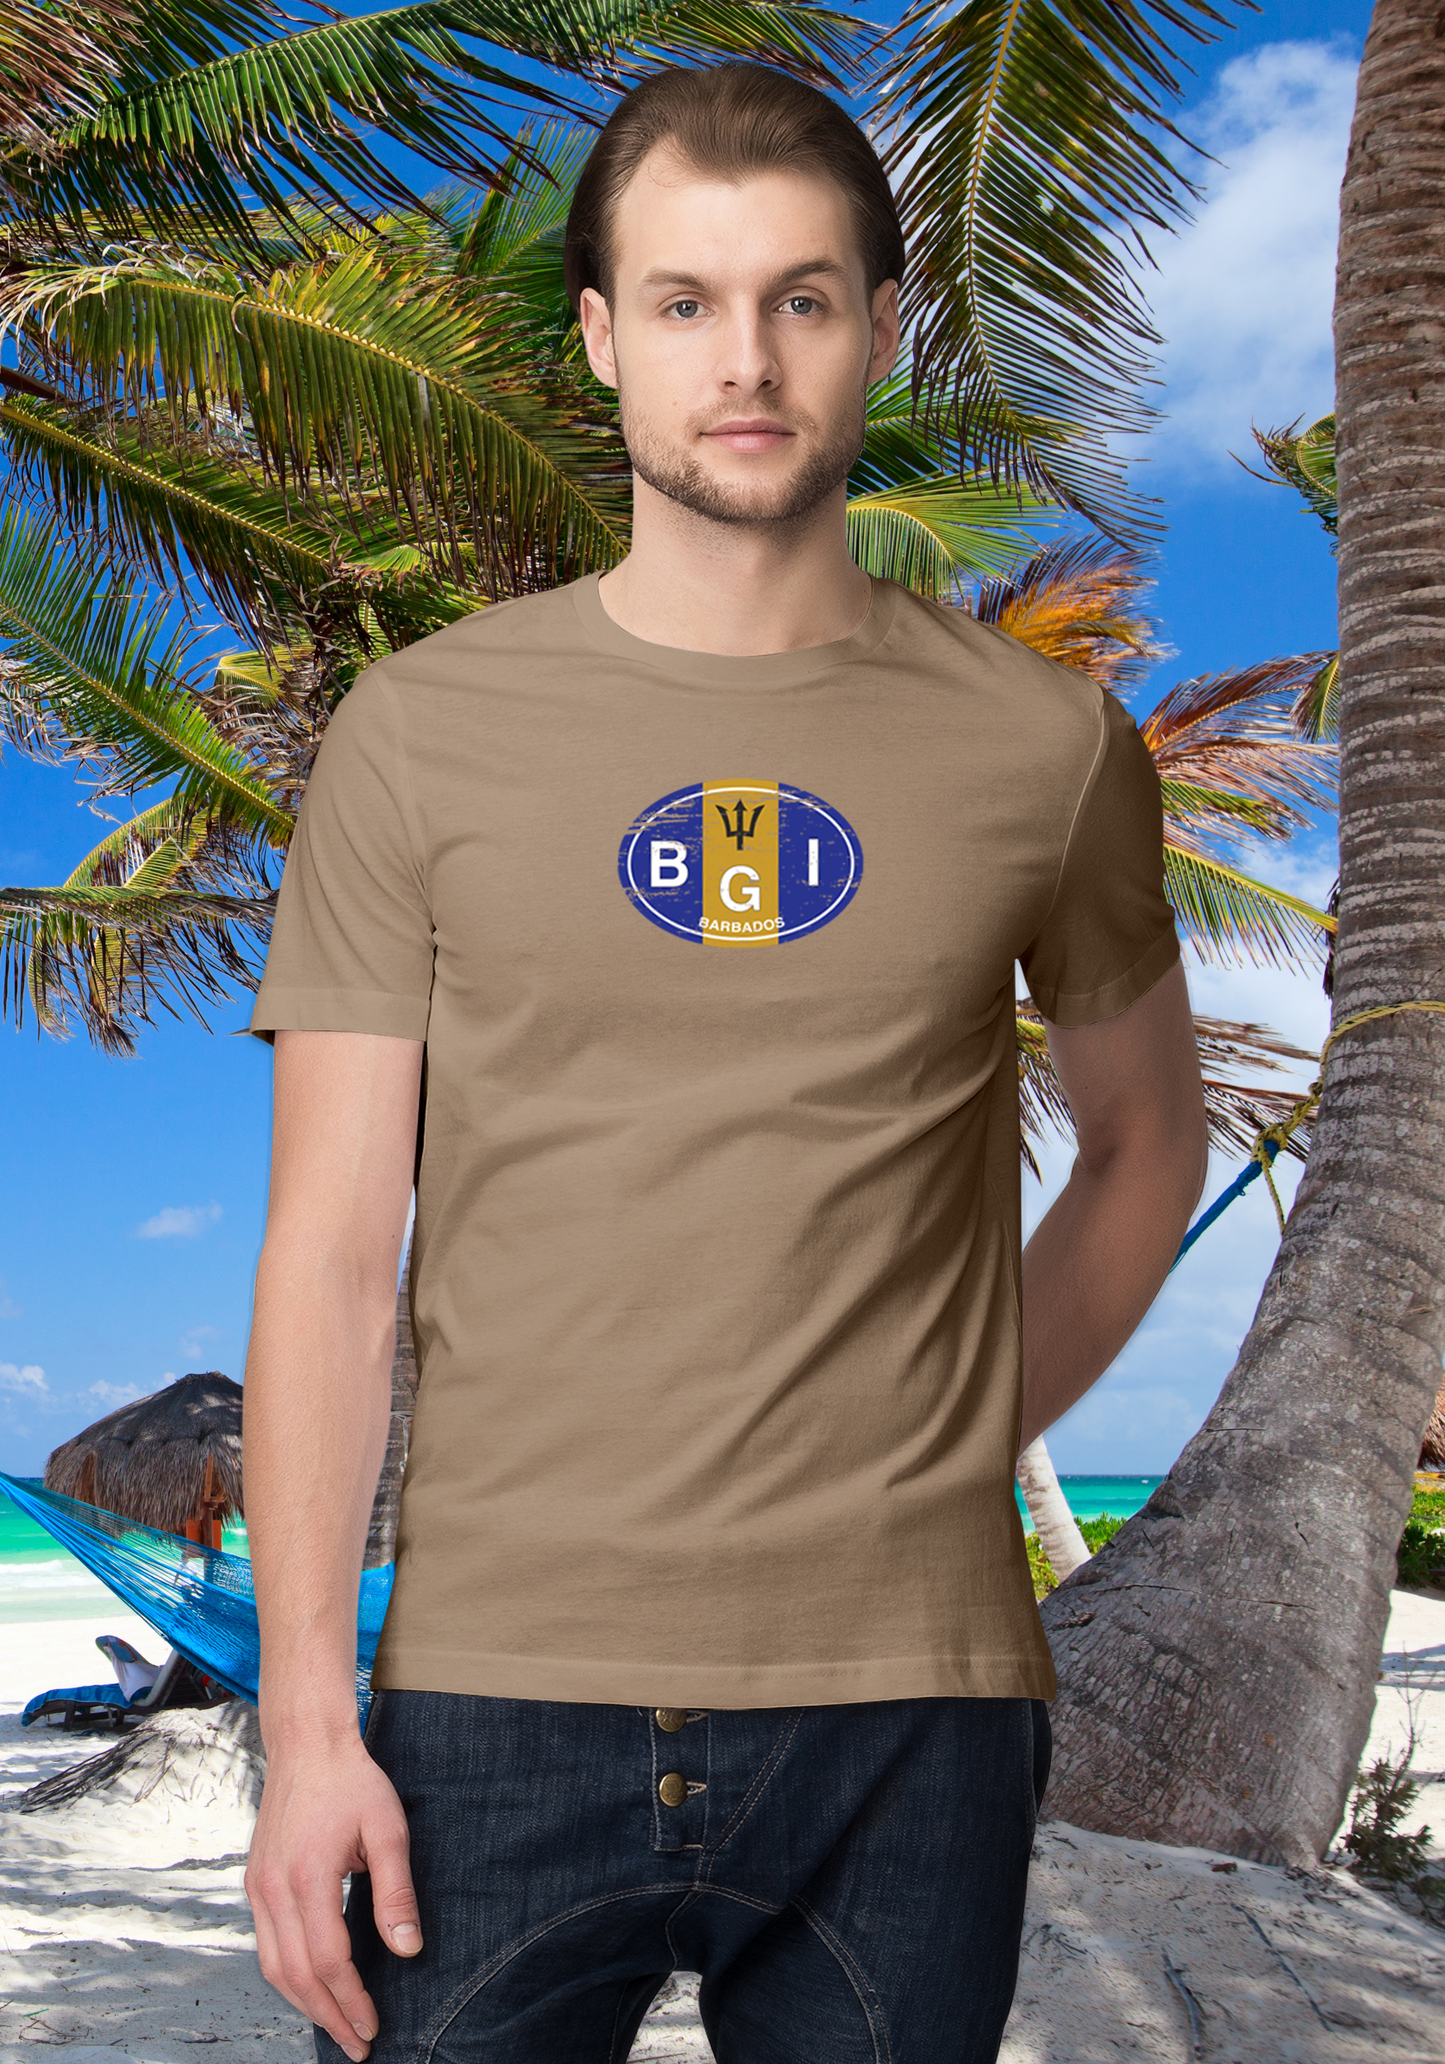 Barbados Men's Flag T-Shirt Souvenirs - My Destination Location